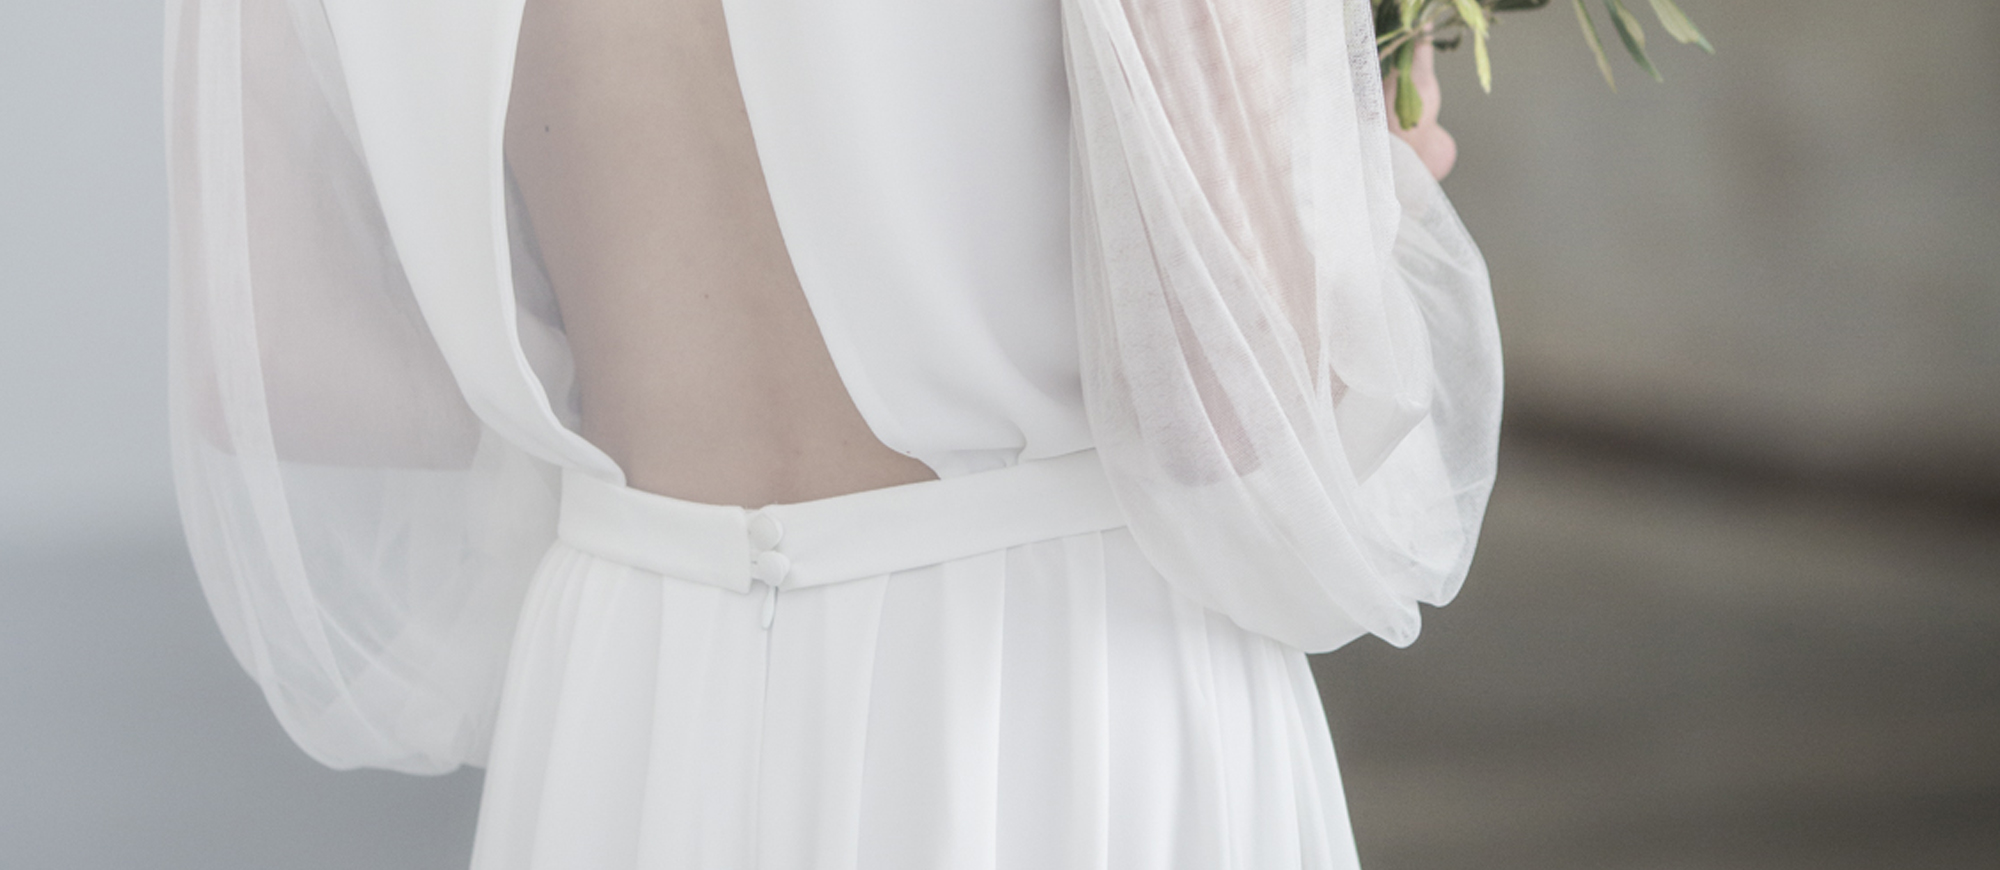 Création de robe de mariée contemporaine Atelier Sylvie Mispouillé